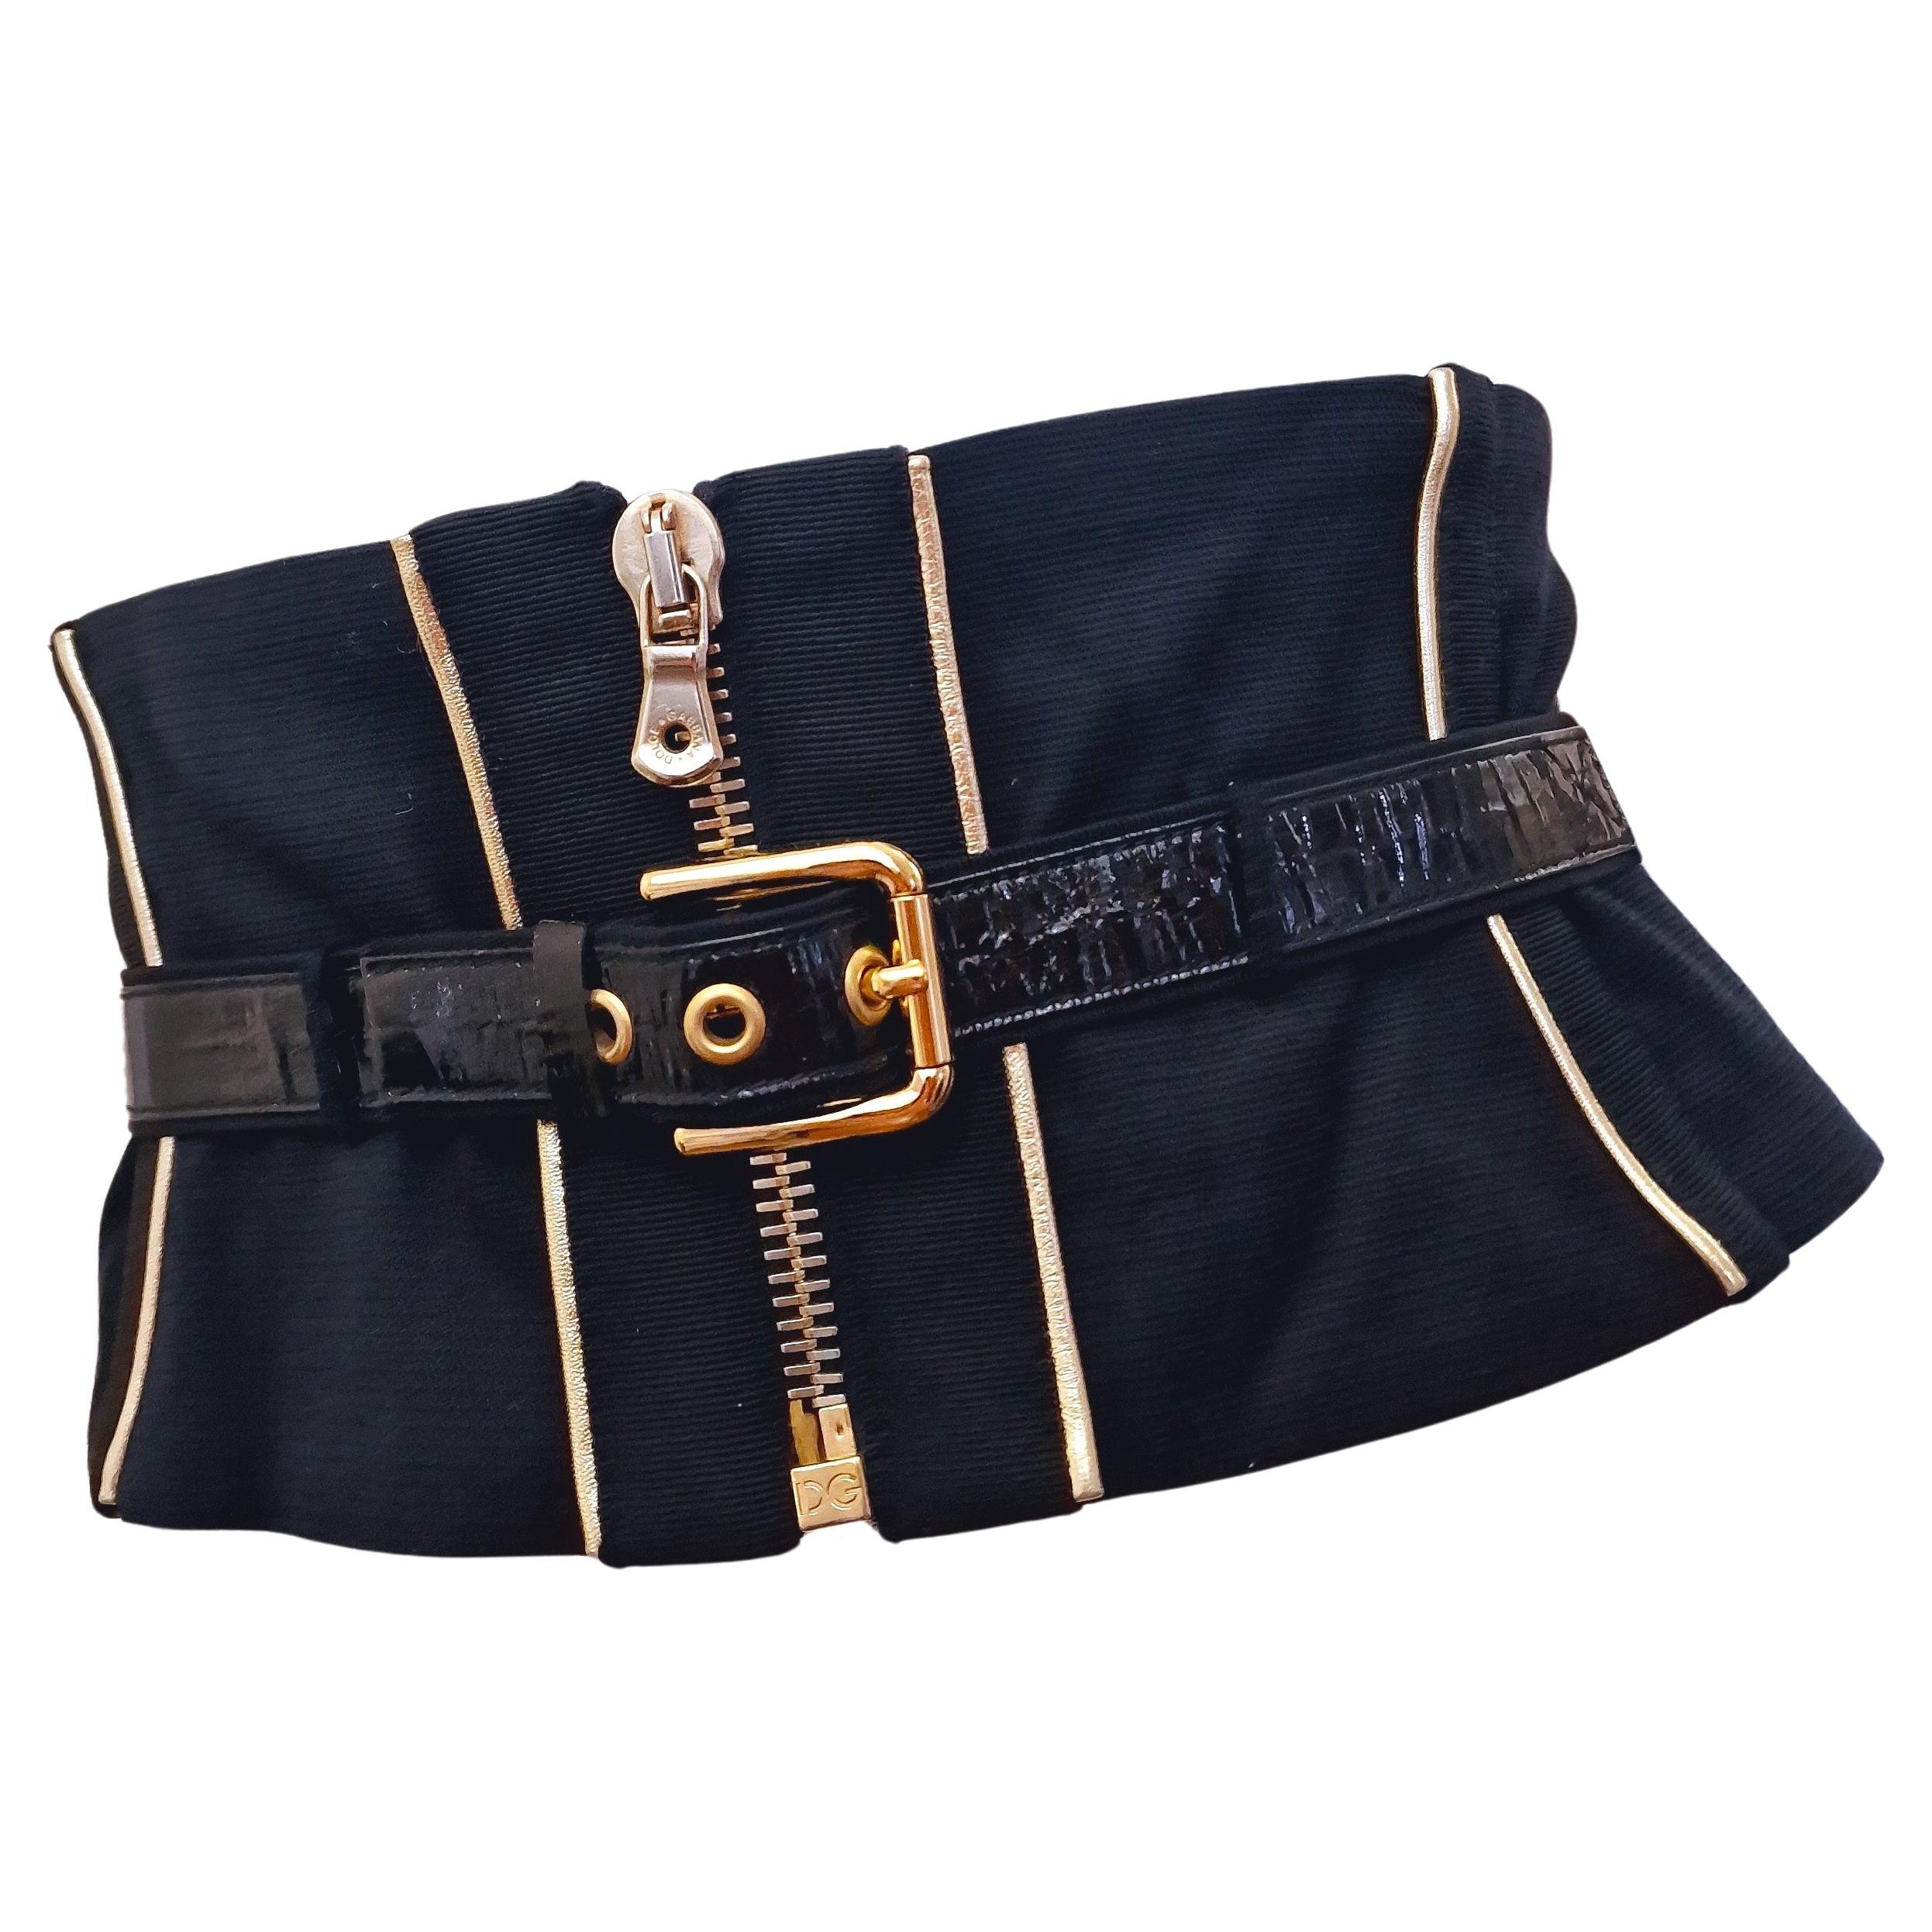 D&G Dolce and Gabbana Metal Leather Gold Bondage Black Bustier Top Corset Belt